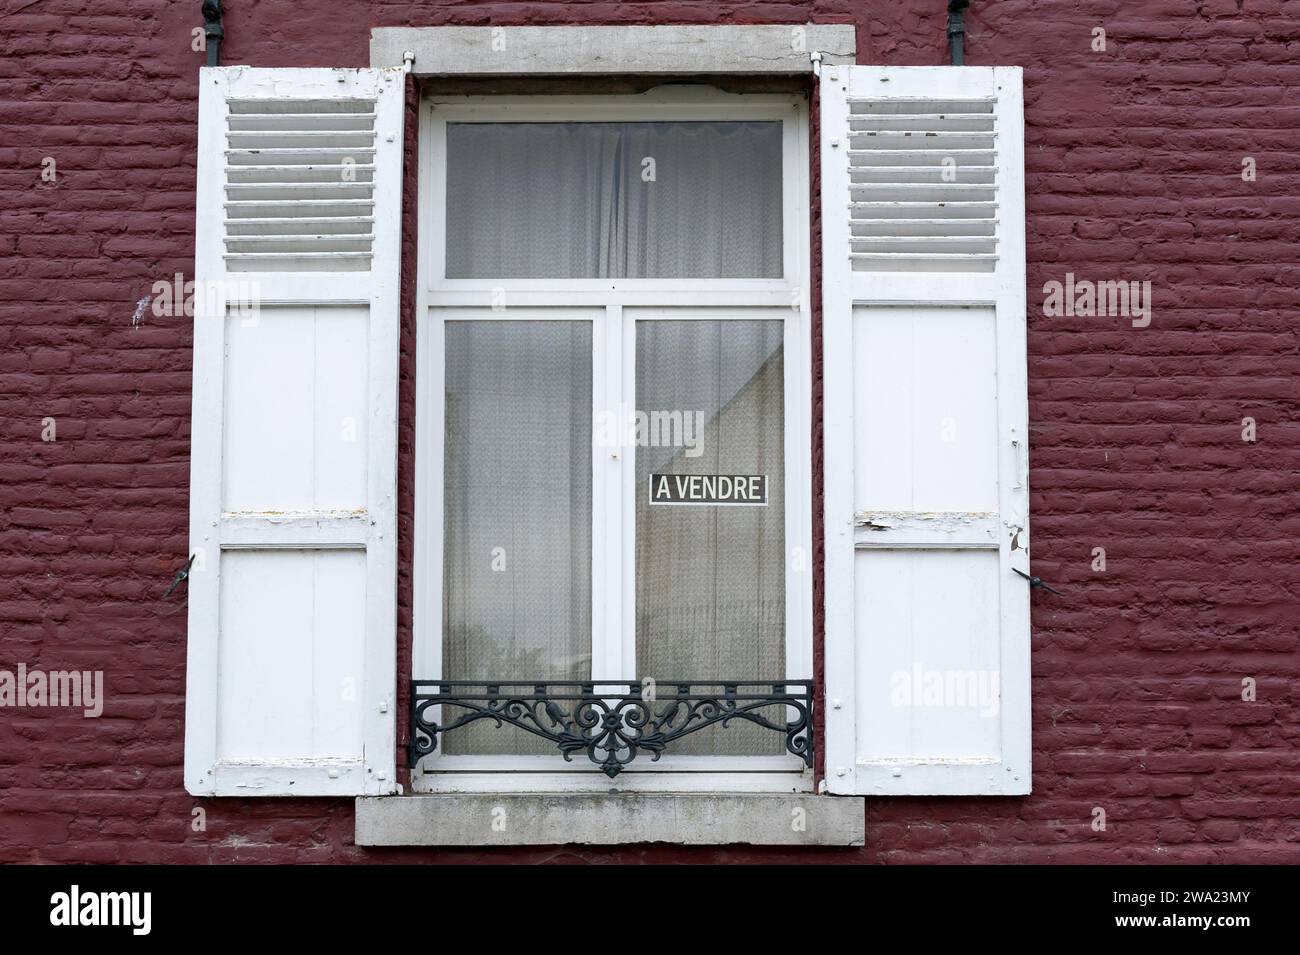 Maisons a vendre ou a louer - Affiche sur les fenêtres | House for rent or to sale - Poster on the window Stock Photo